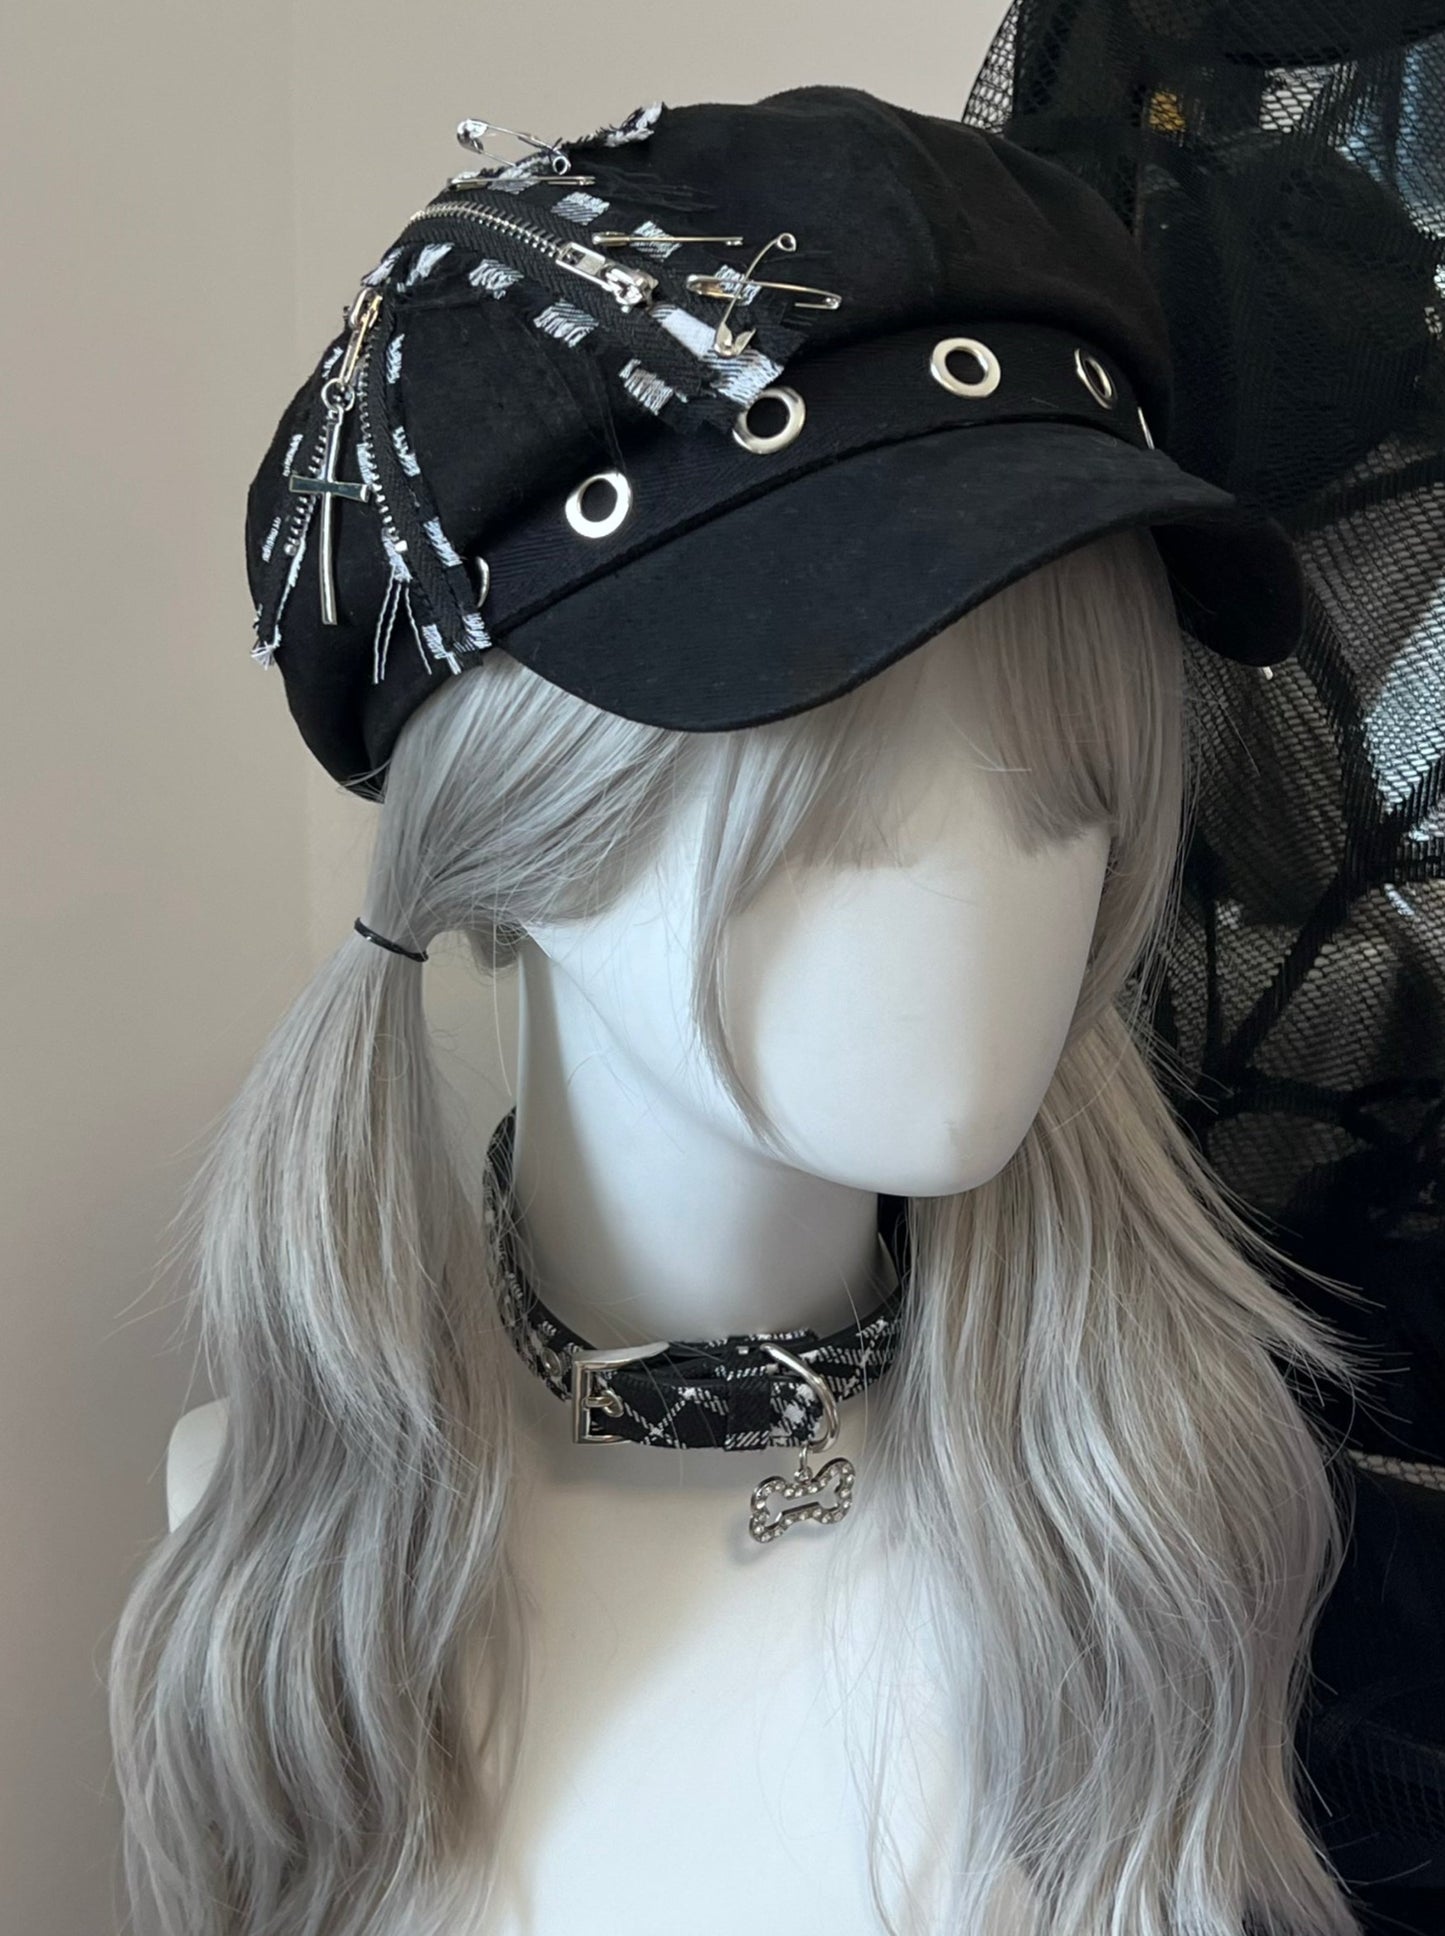 Subculture Punk Goth Hat